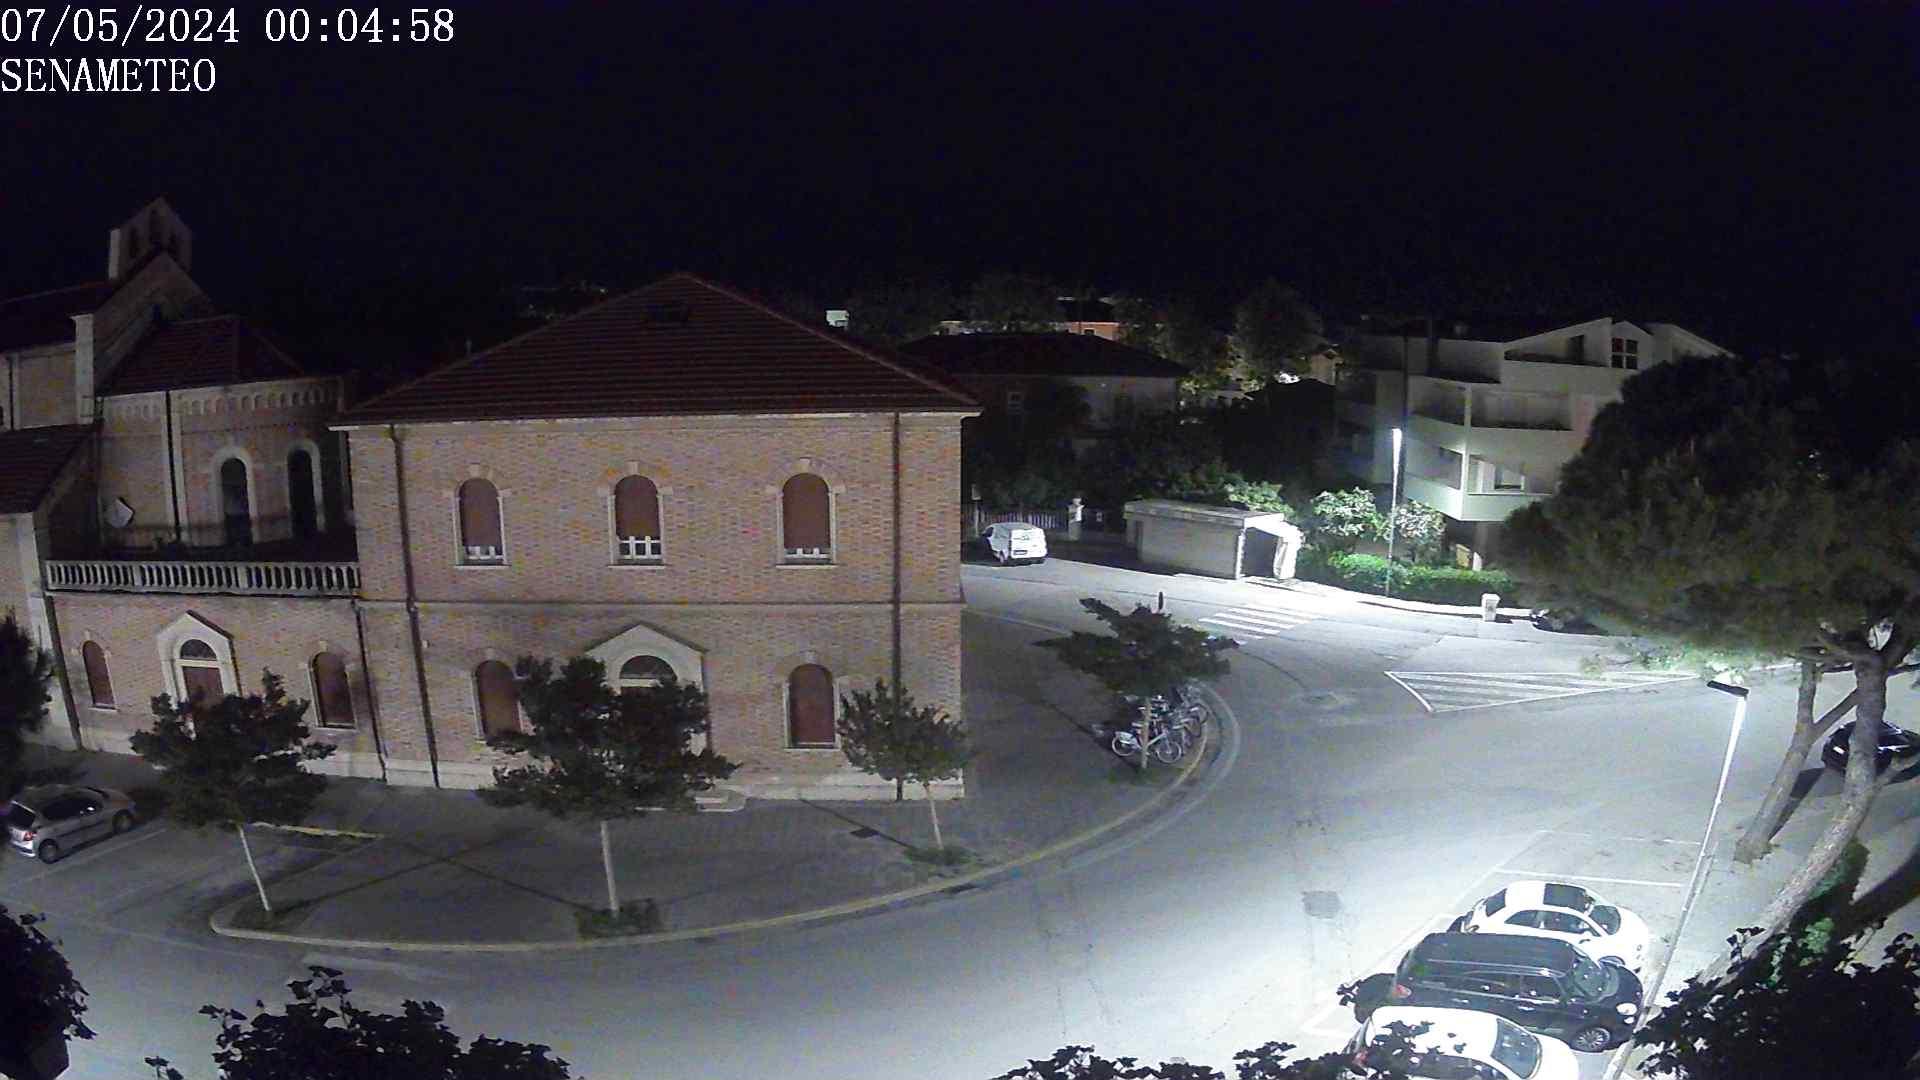 Webcam Senigallia - SENAMETEO